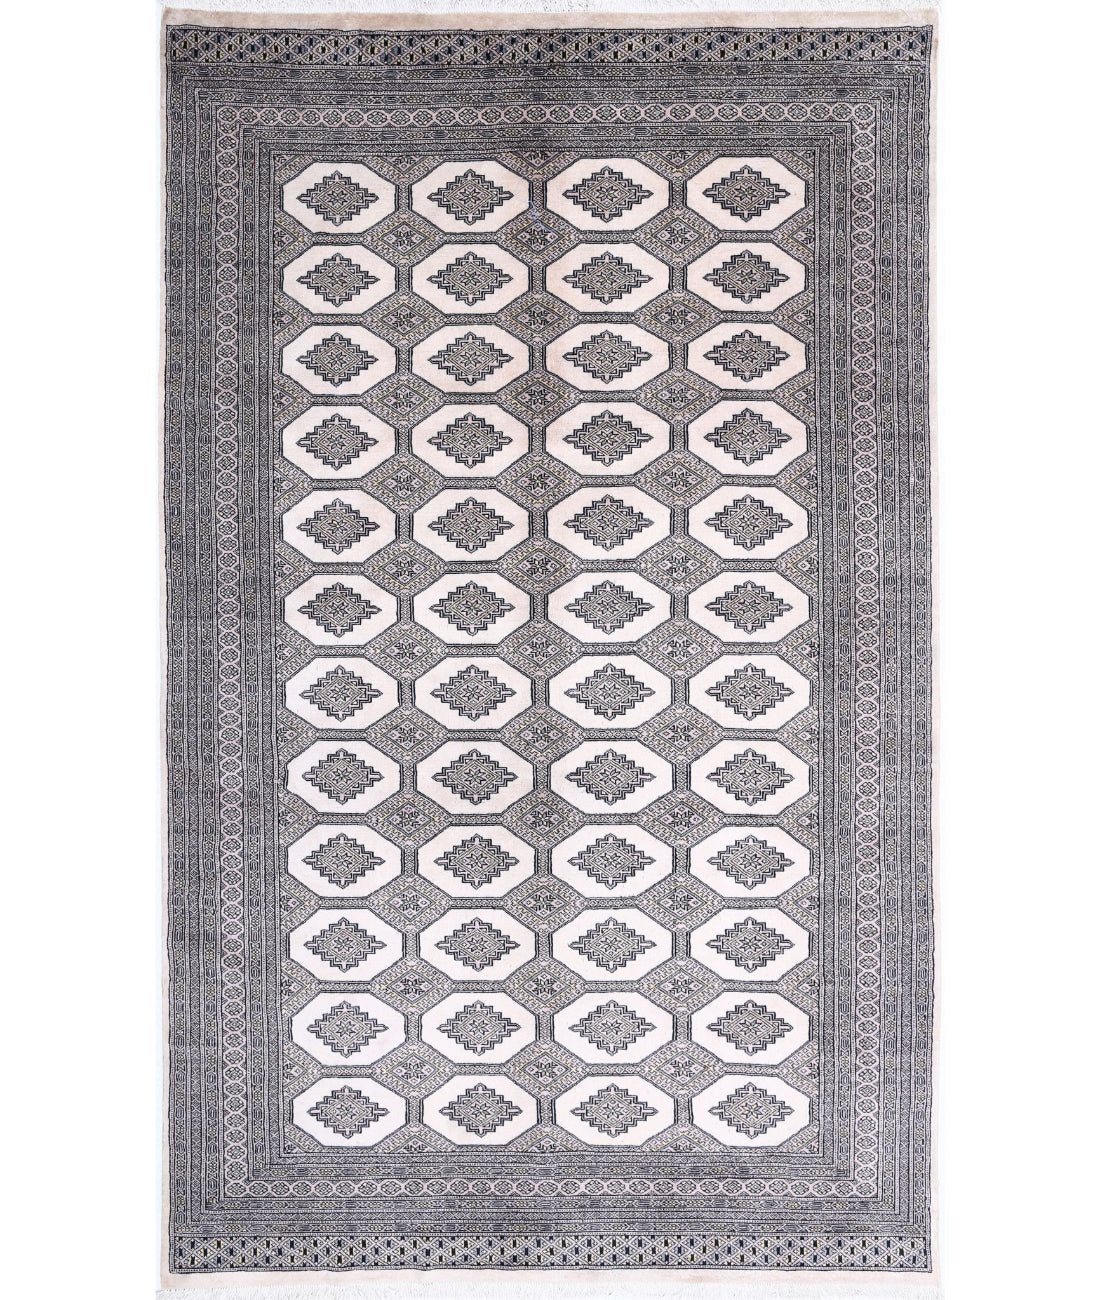 Hand Knotted Tribal Bokhara Wool Rug - 6'5'' x 10'7'' 6'5'' x 10'7'' (193 X 318) / Ivory / Black